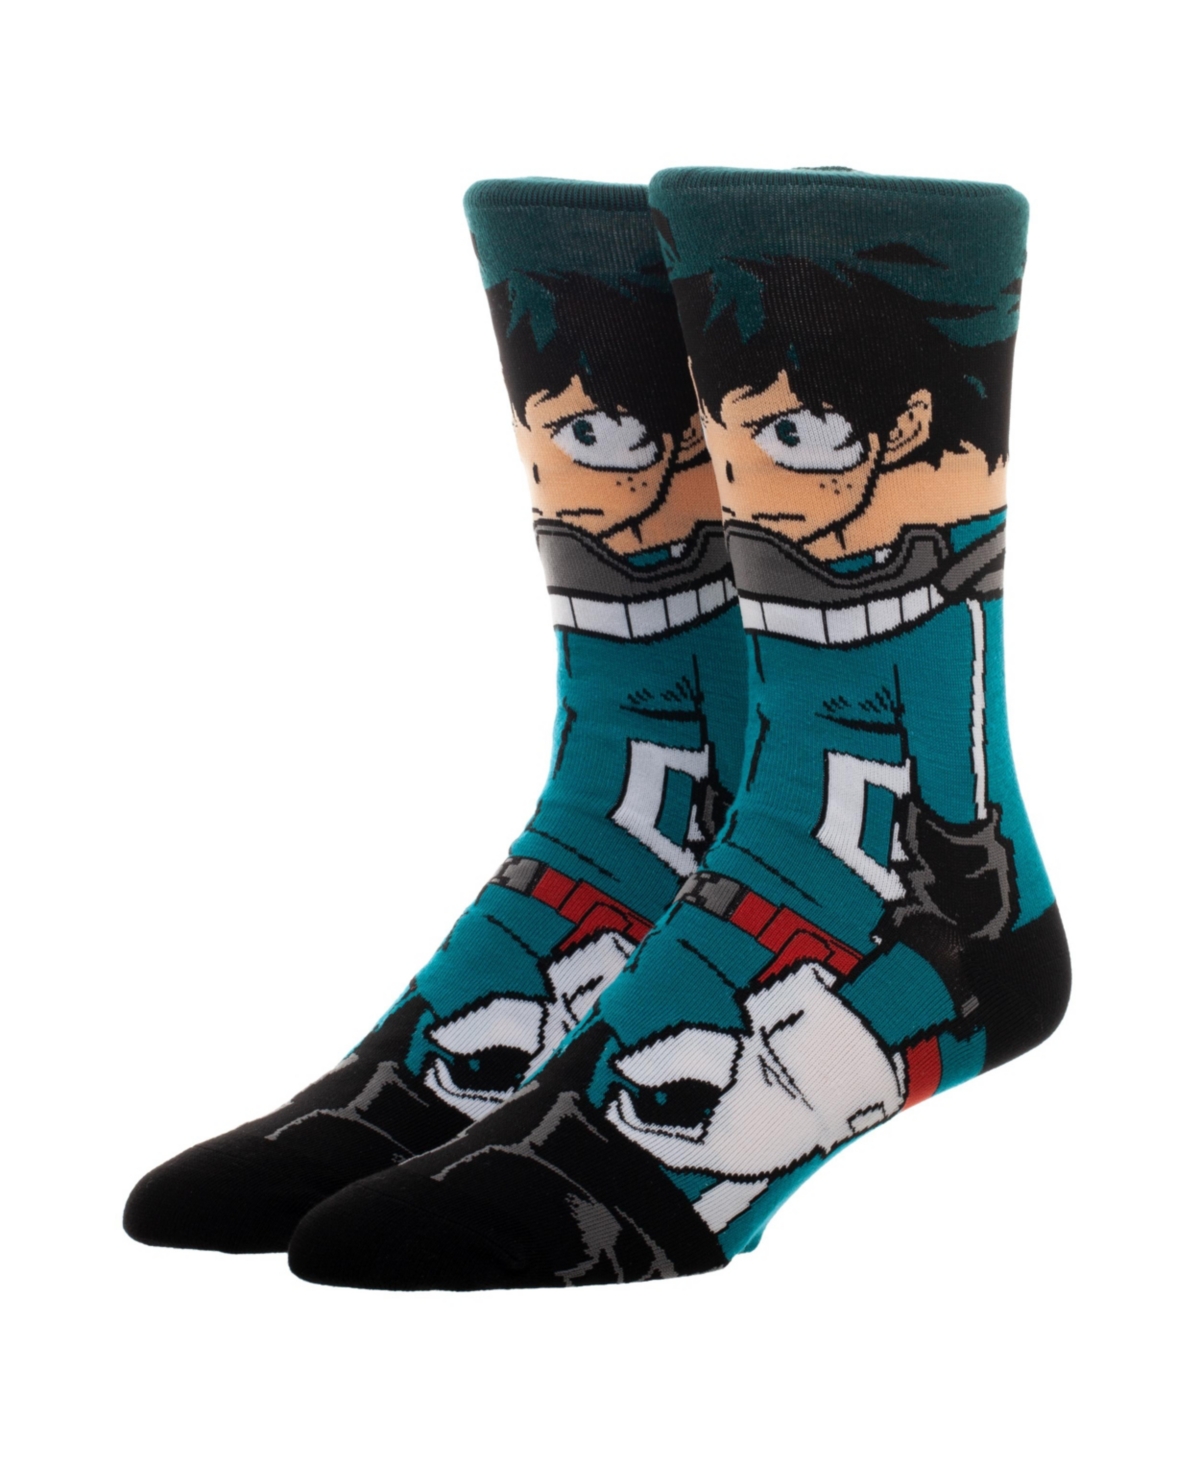 Men's Anime Character Izuku Casual Crew Socks for Men - Multicolored